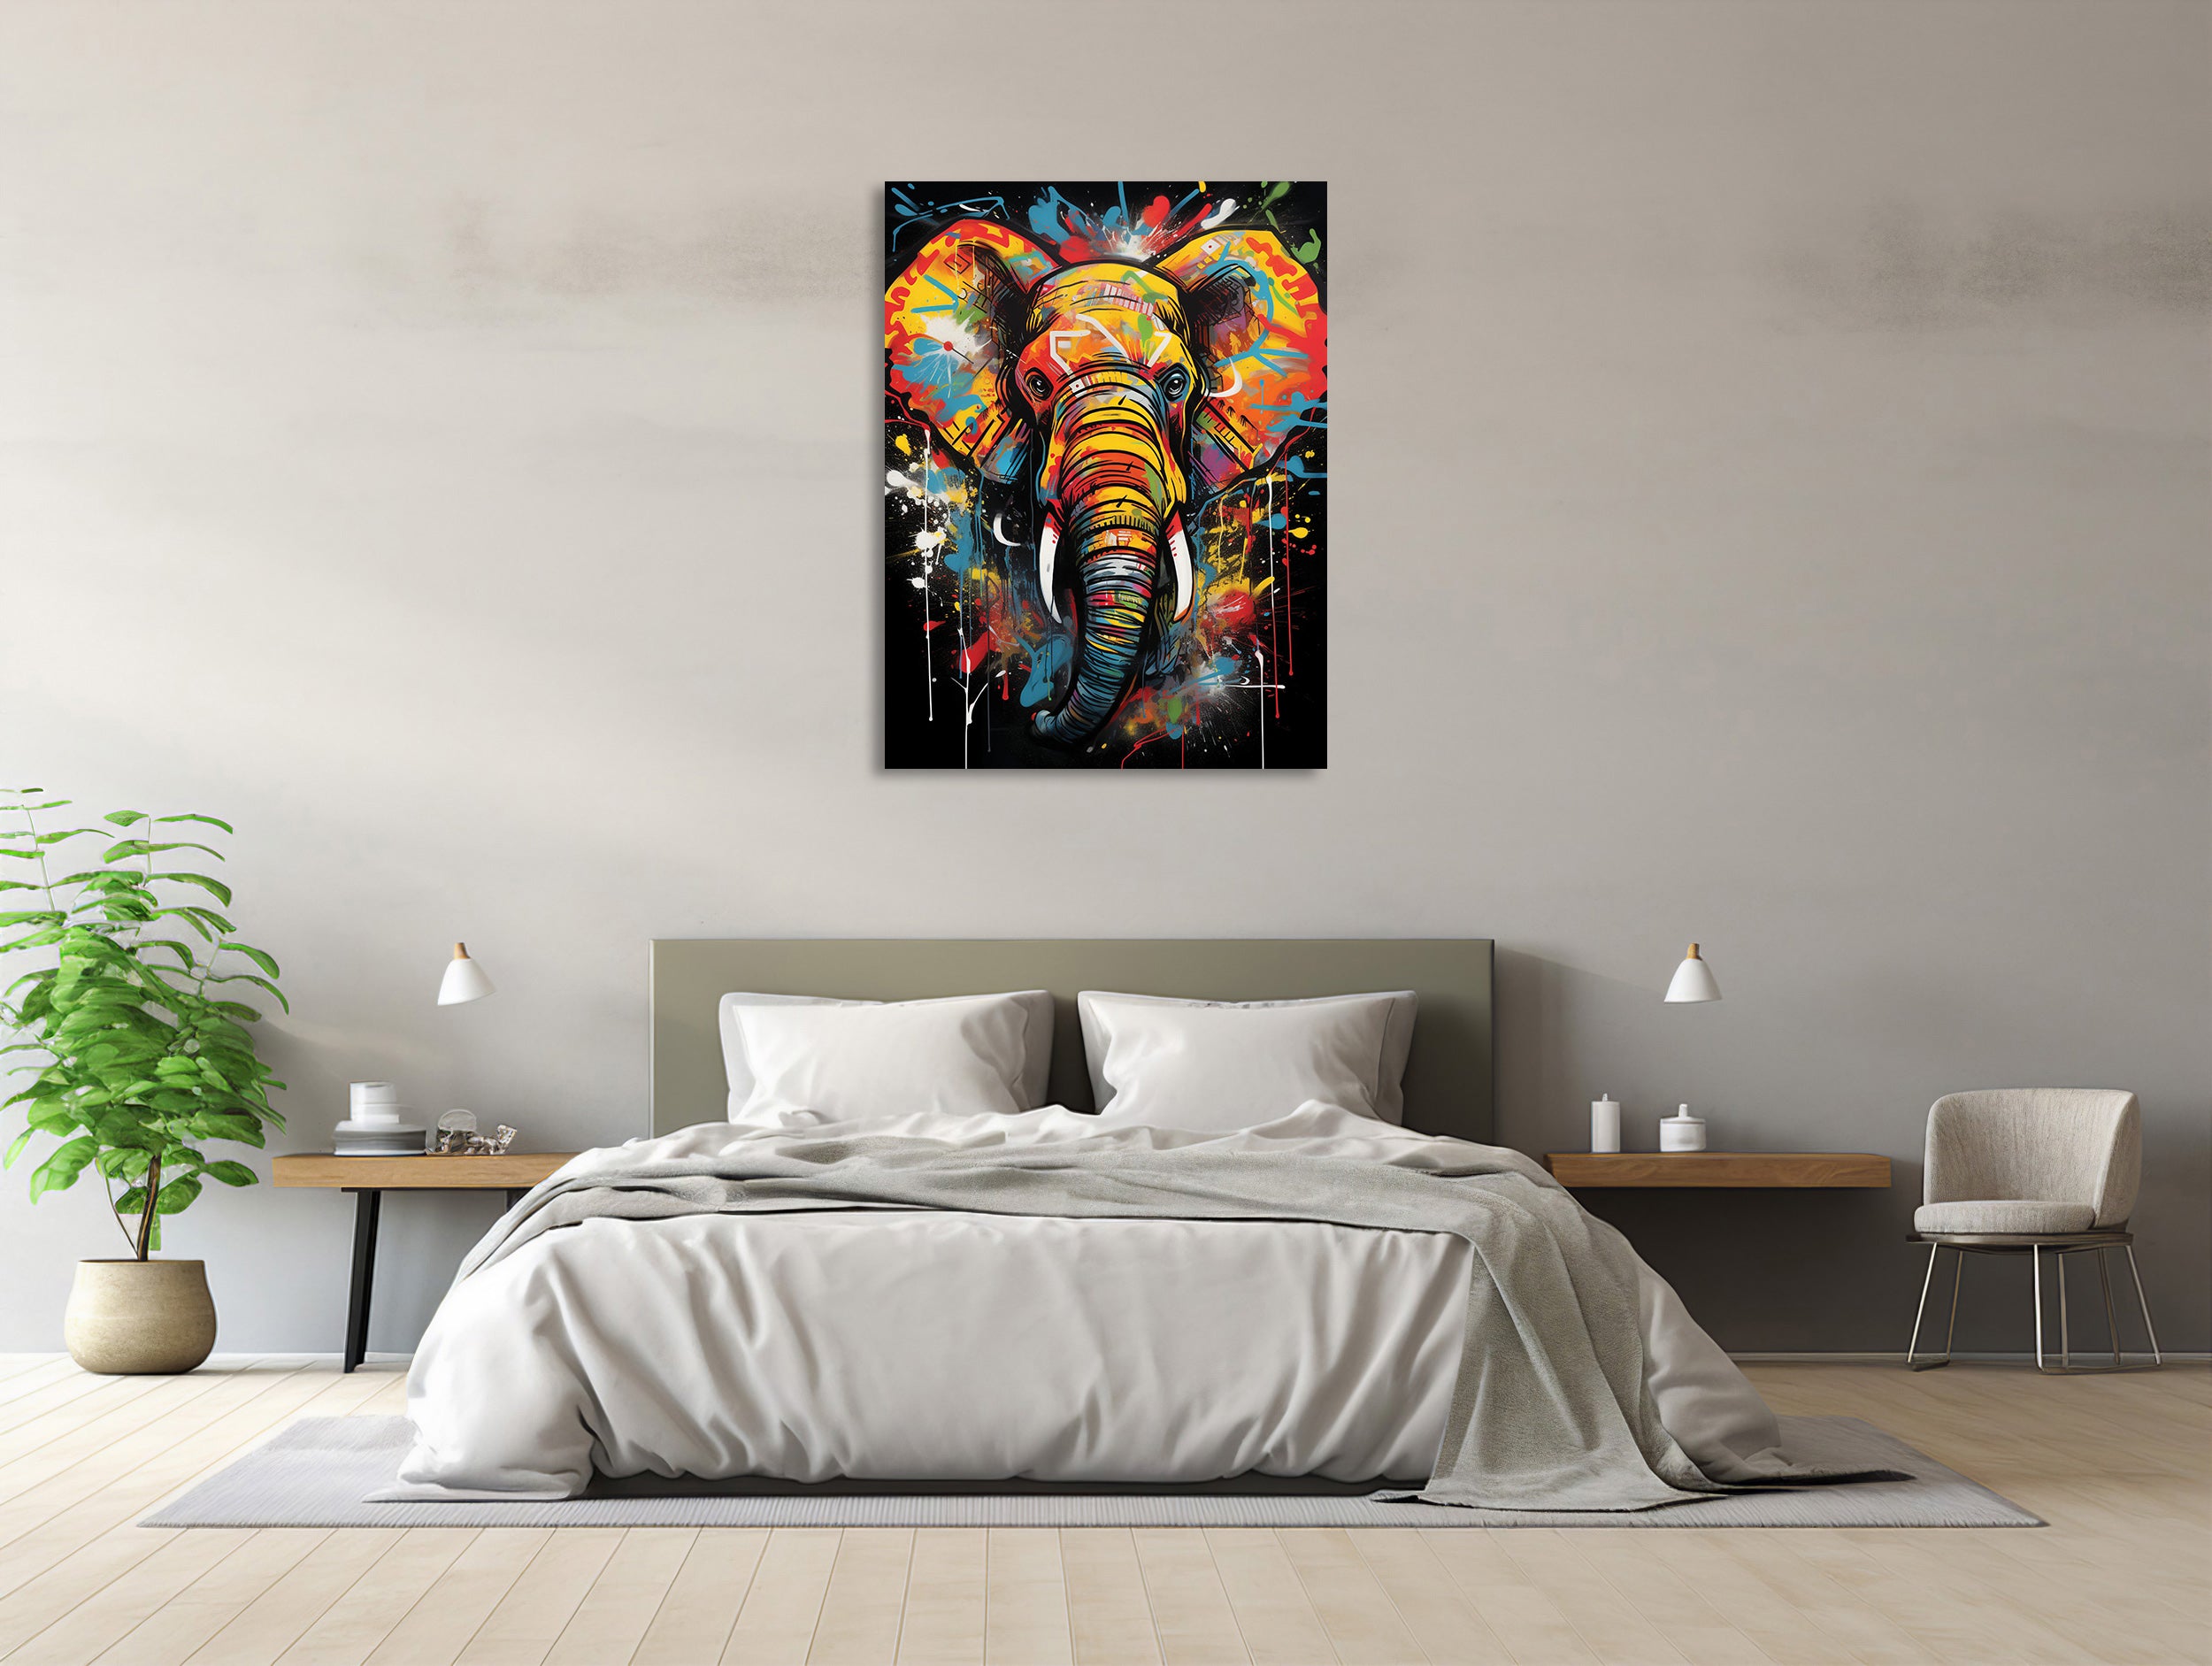 Farbenfroher Urban Elefant